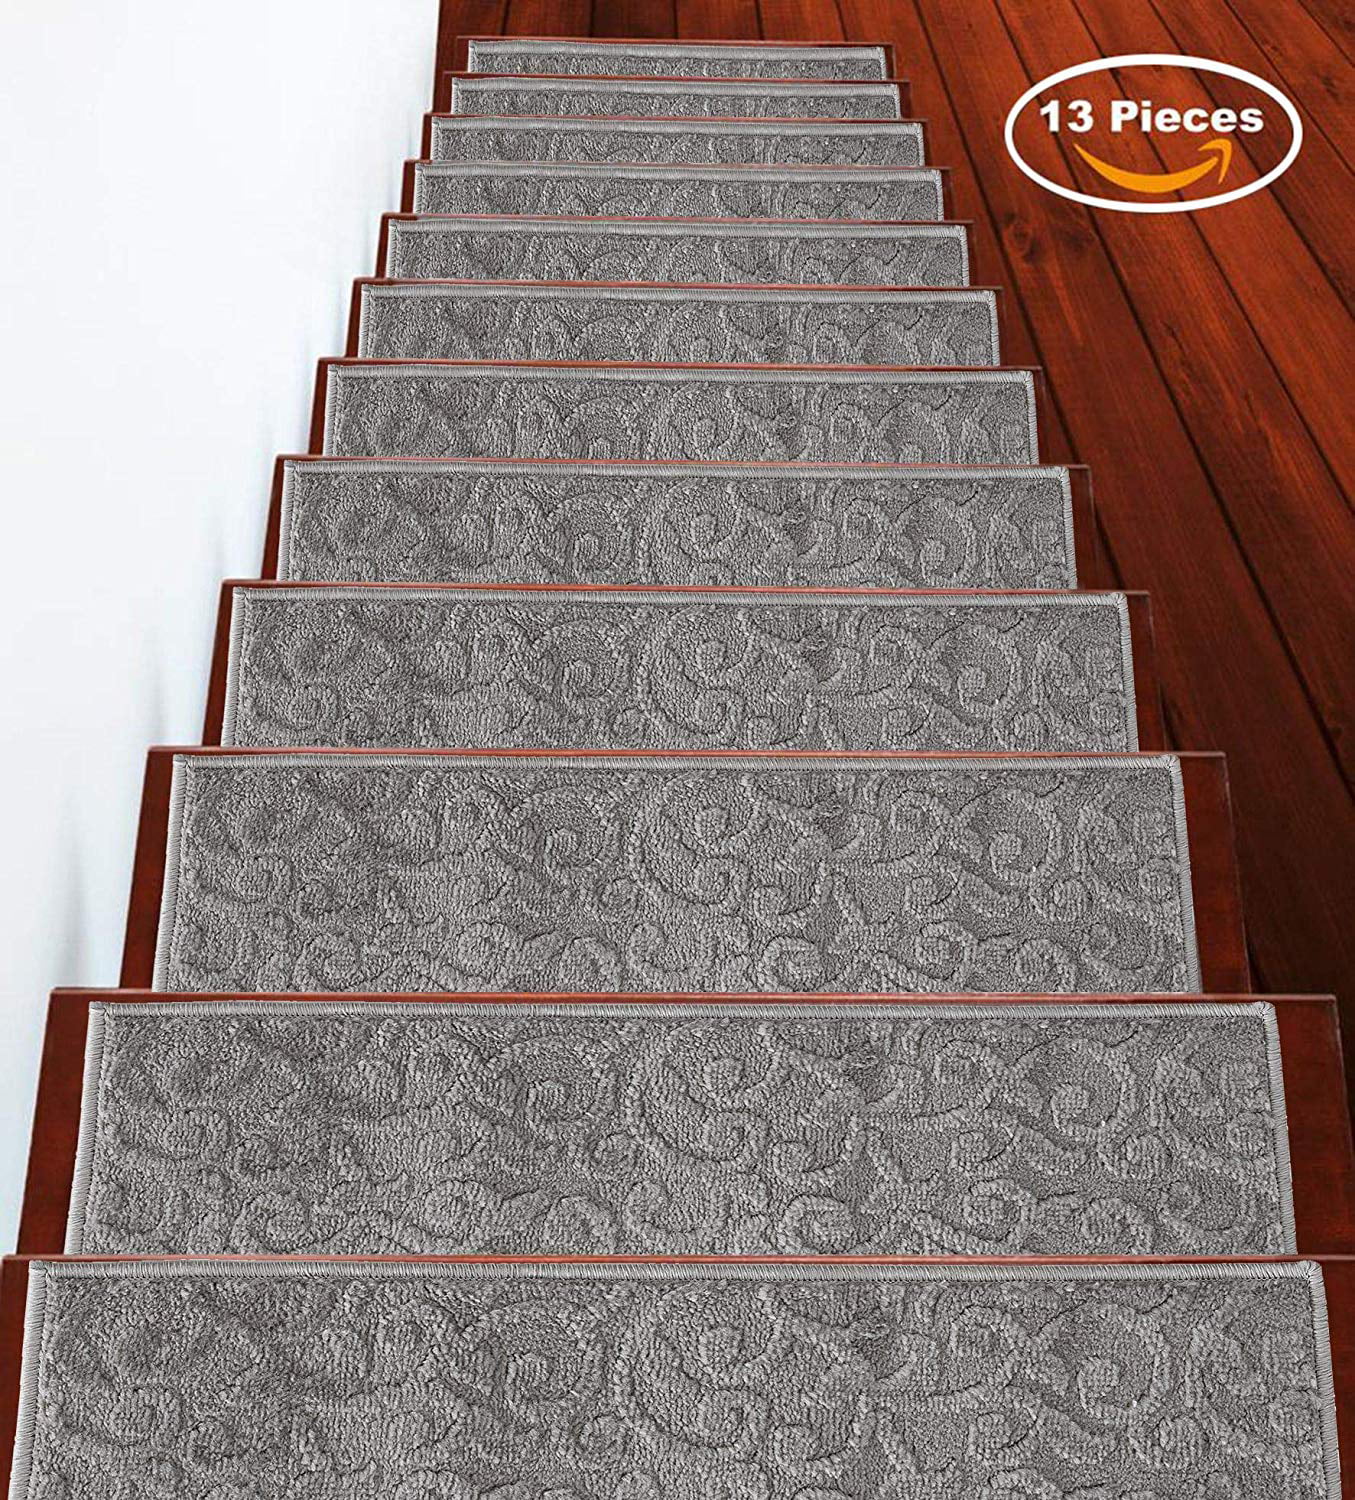 Set of 7 Wool Non Slip Carpet Treads 26" x 9" Black Stair Treads by Rug Depot 